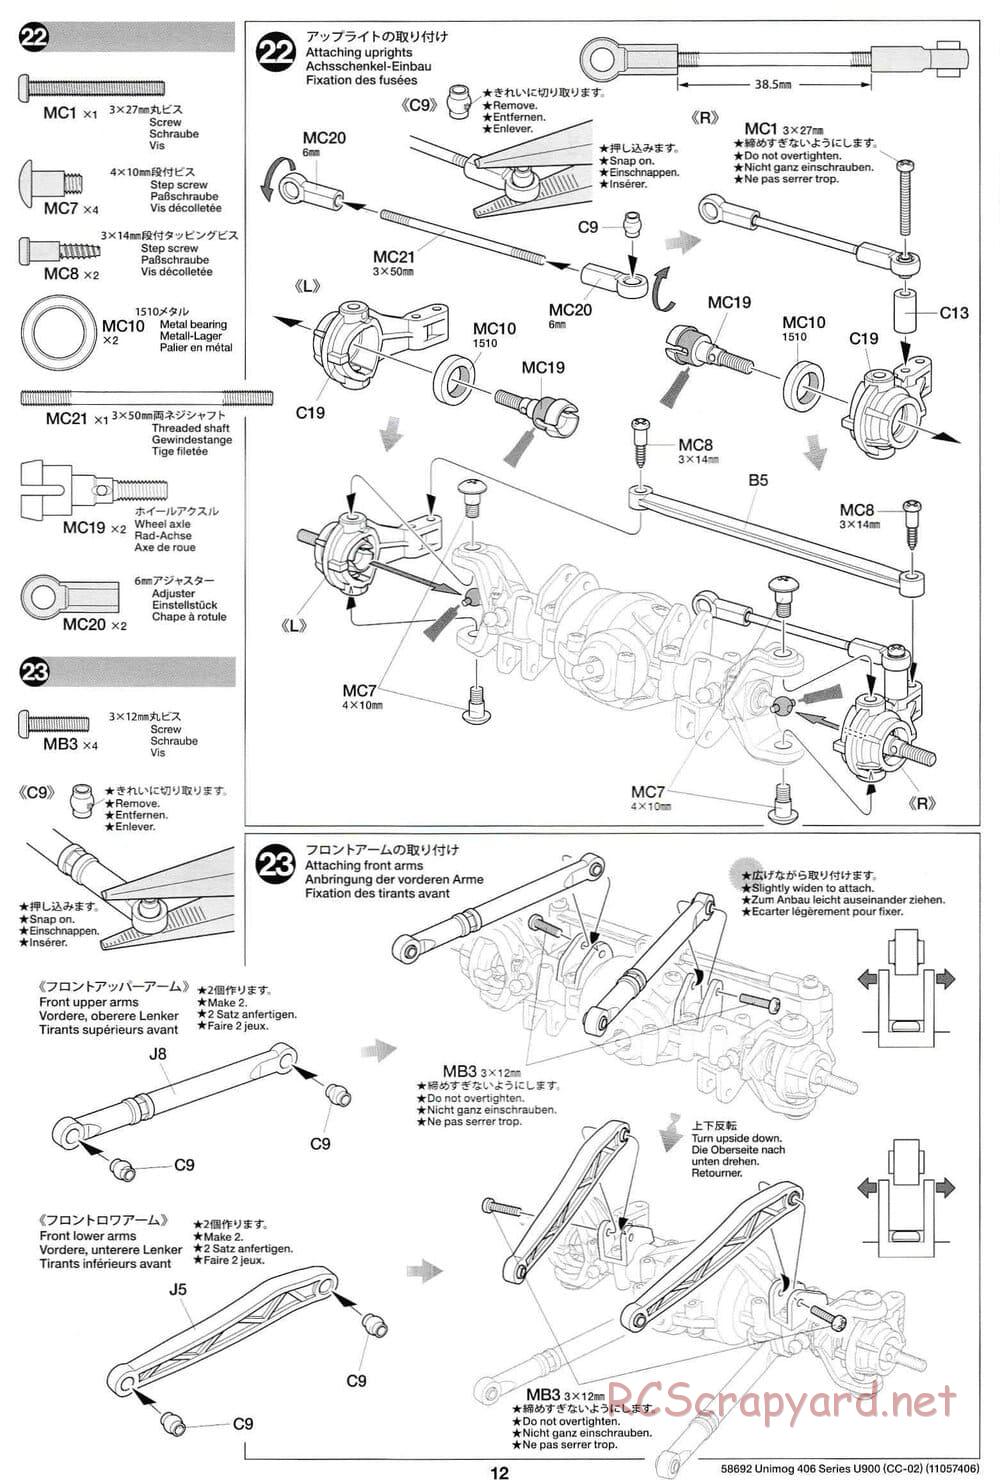 Tamiya - Mercedes-Benz Unimog 406 Series U900 - CC-02 Chassis - Manual - Page 12